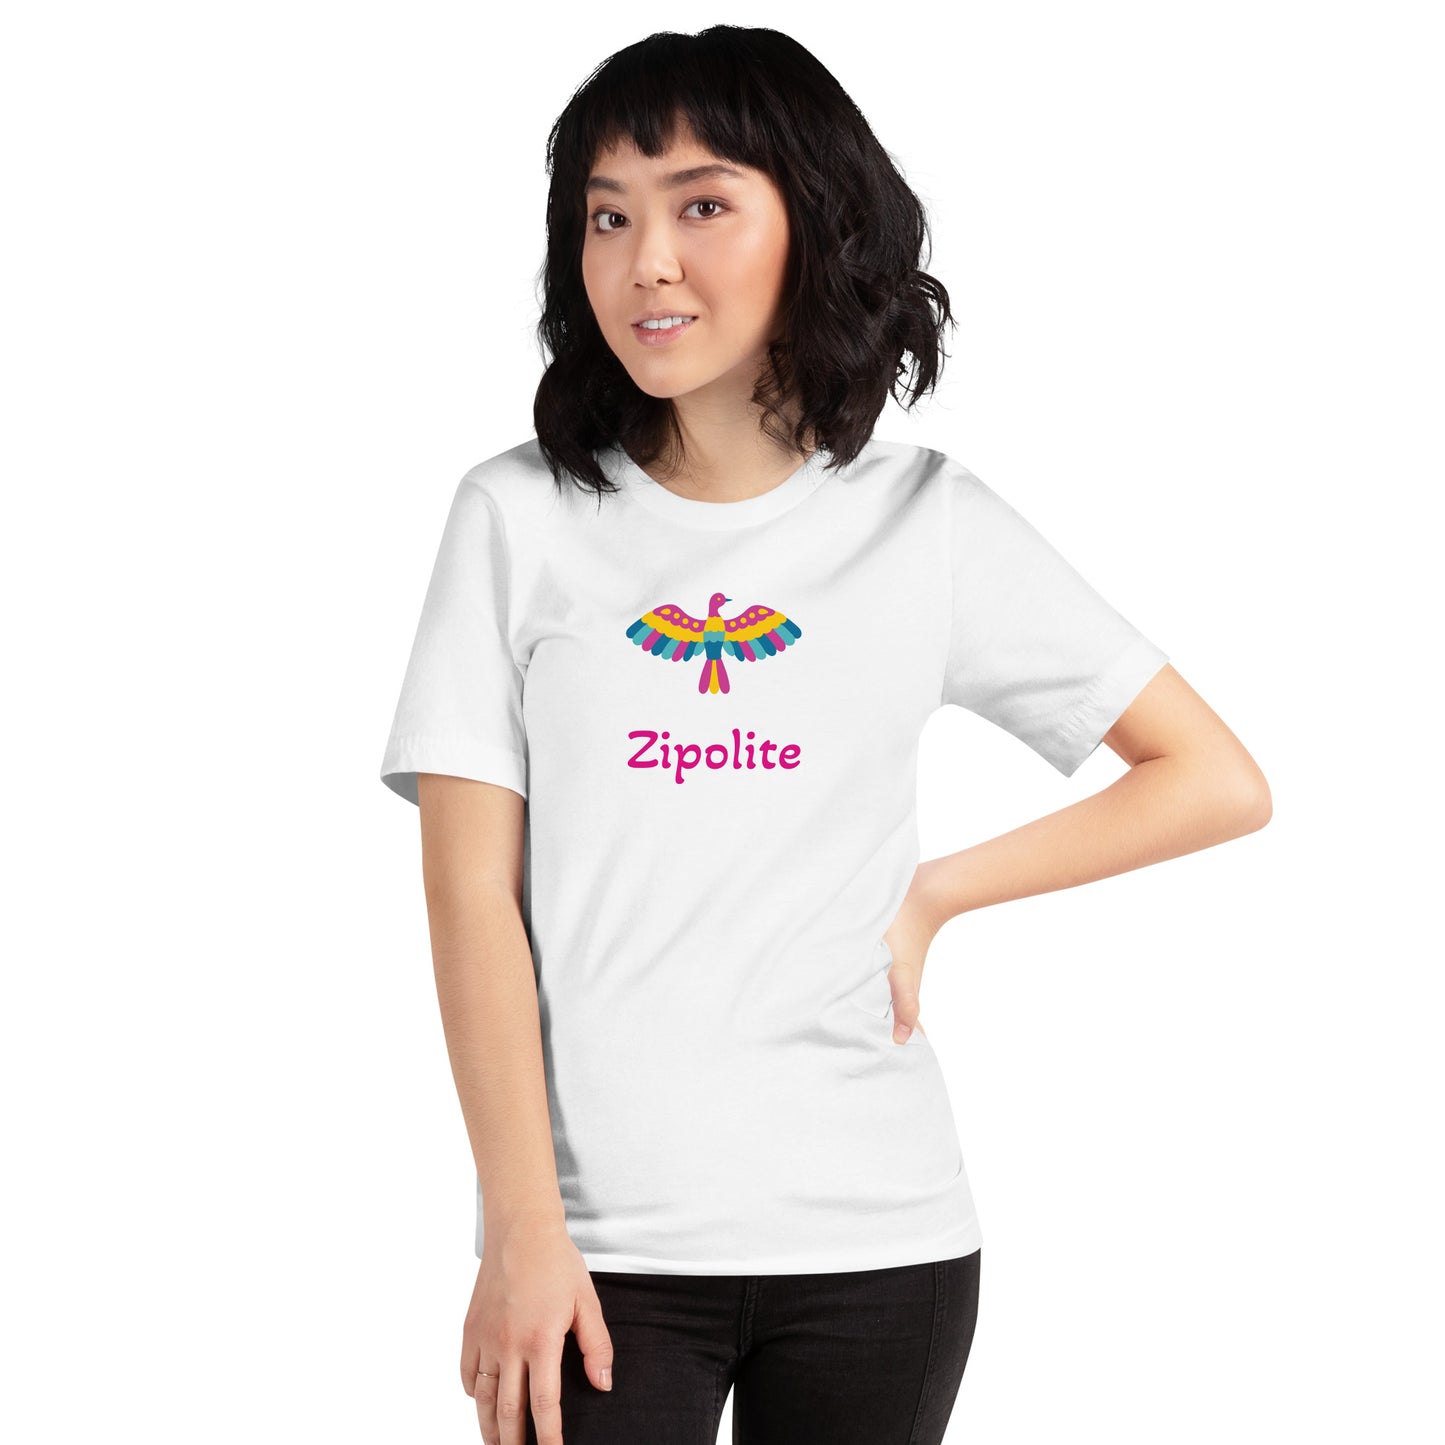 Zipolite unisex t-shirt